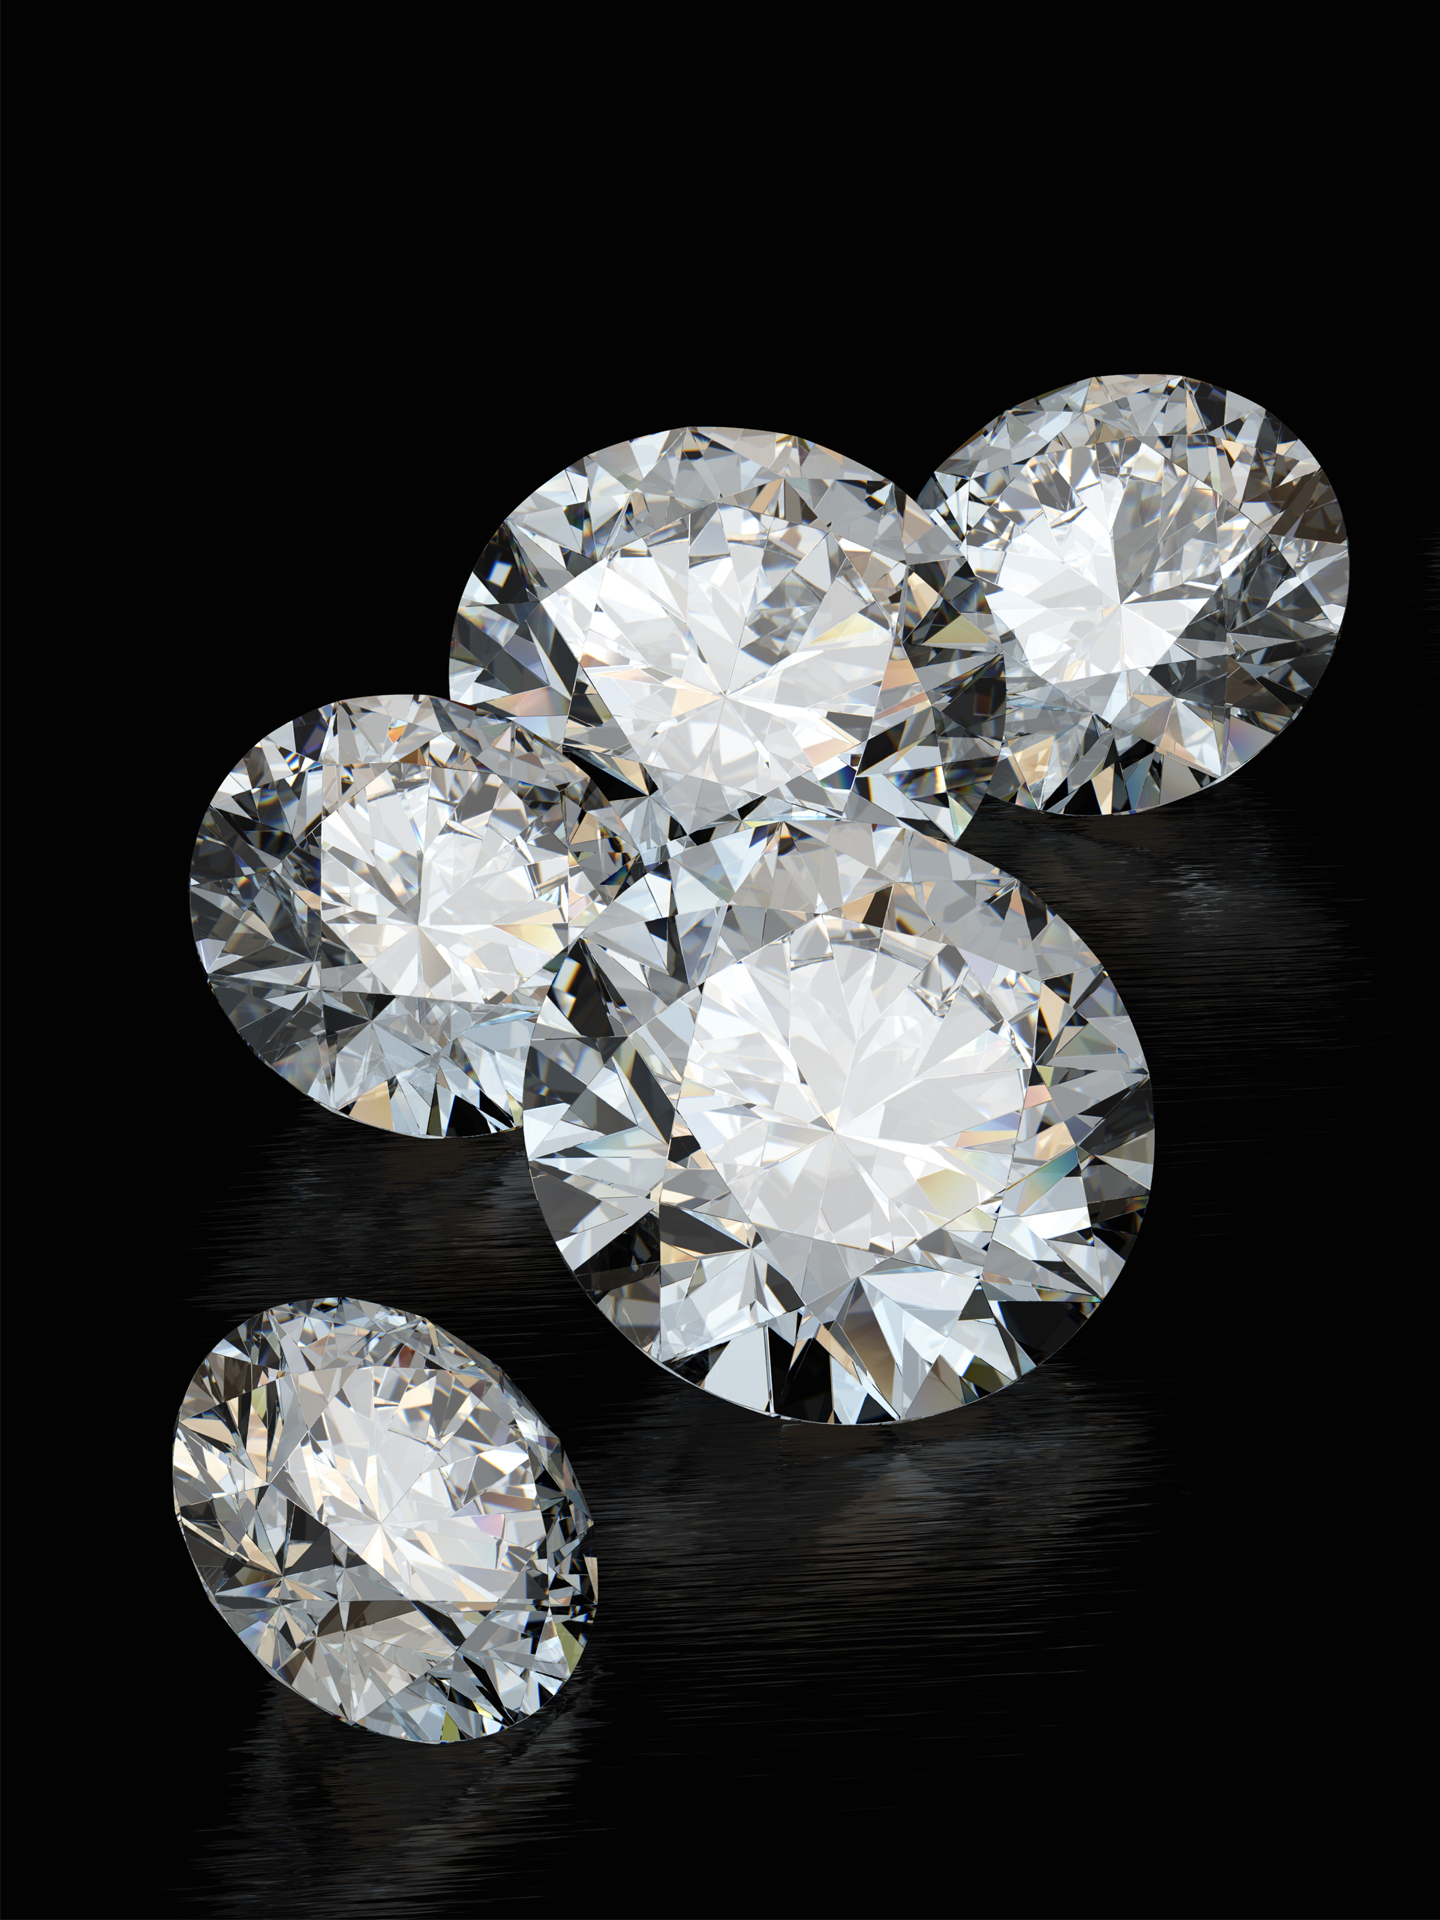 genesis diamond buyers nashville